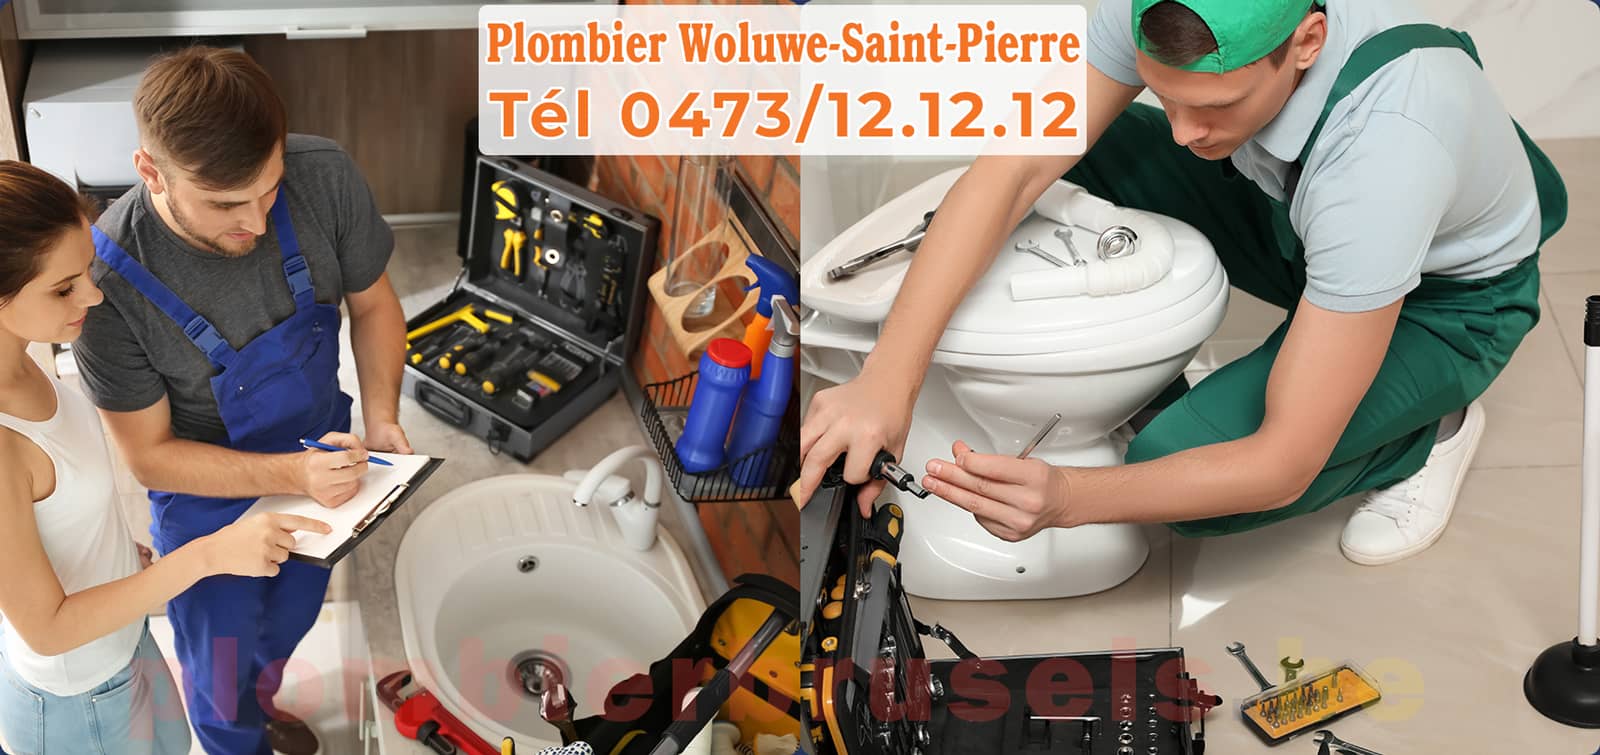 Plombier Woluwe-Saint-Pierre service de Plomberie tél 0473/12.12.12